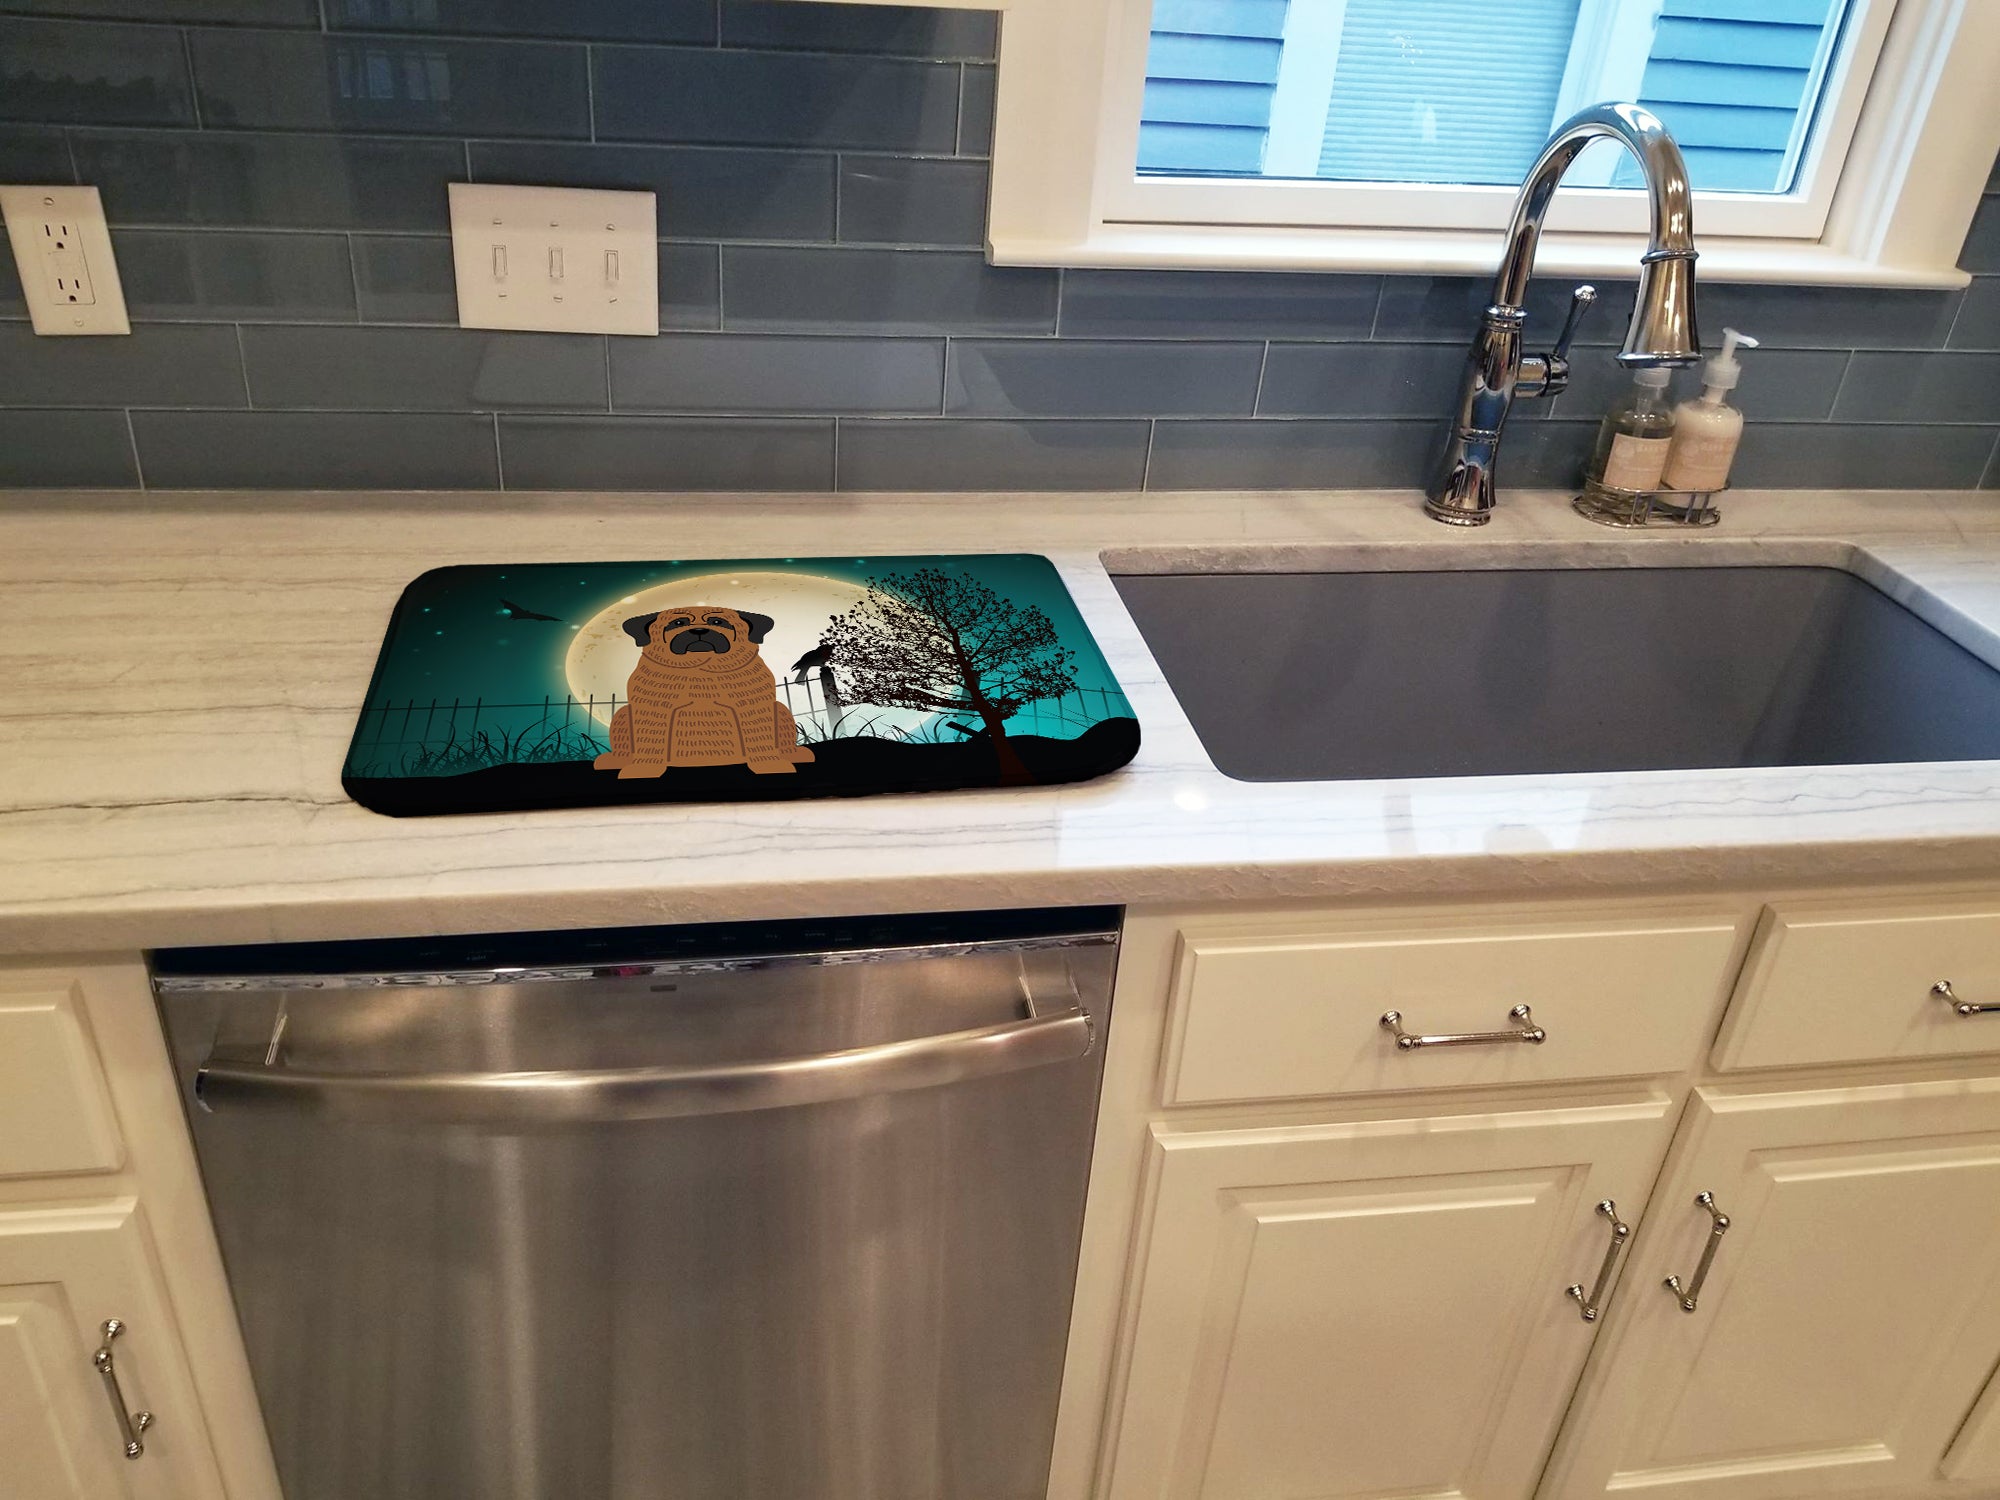 Halloween Scary Mastiff Brindle Dish Drying Mat BB2205DDM